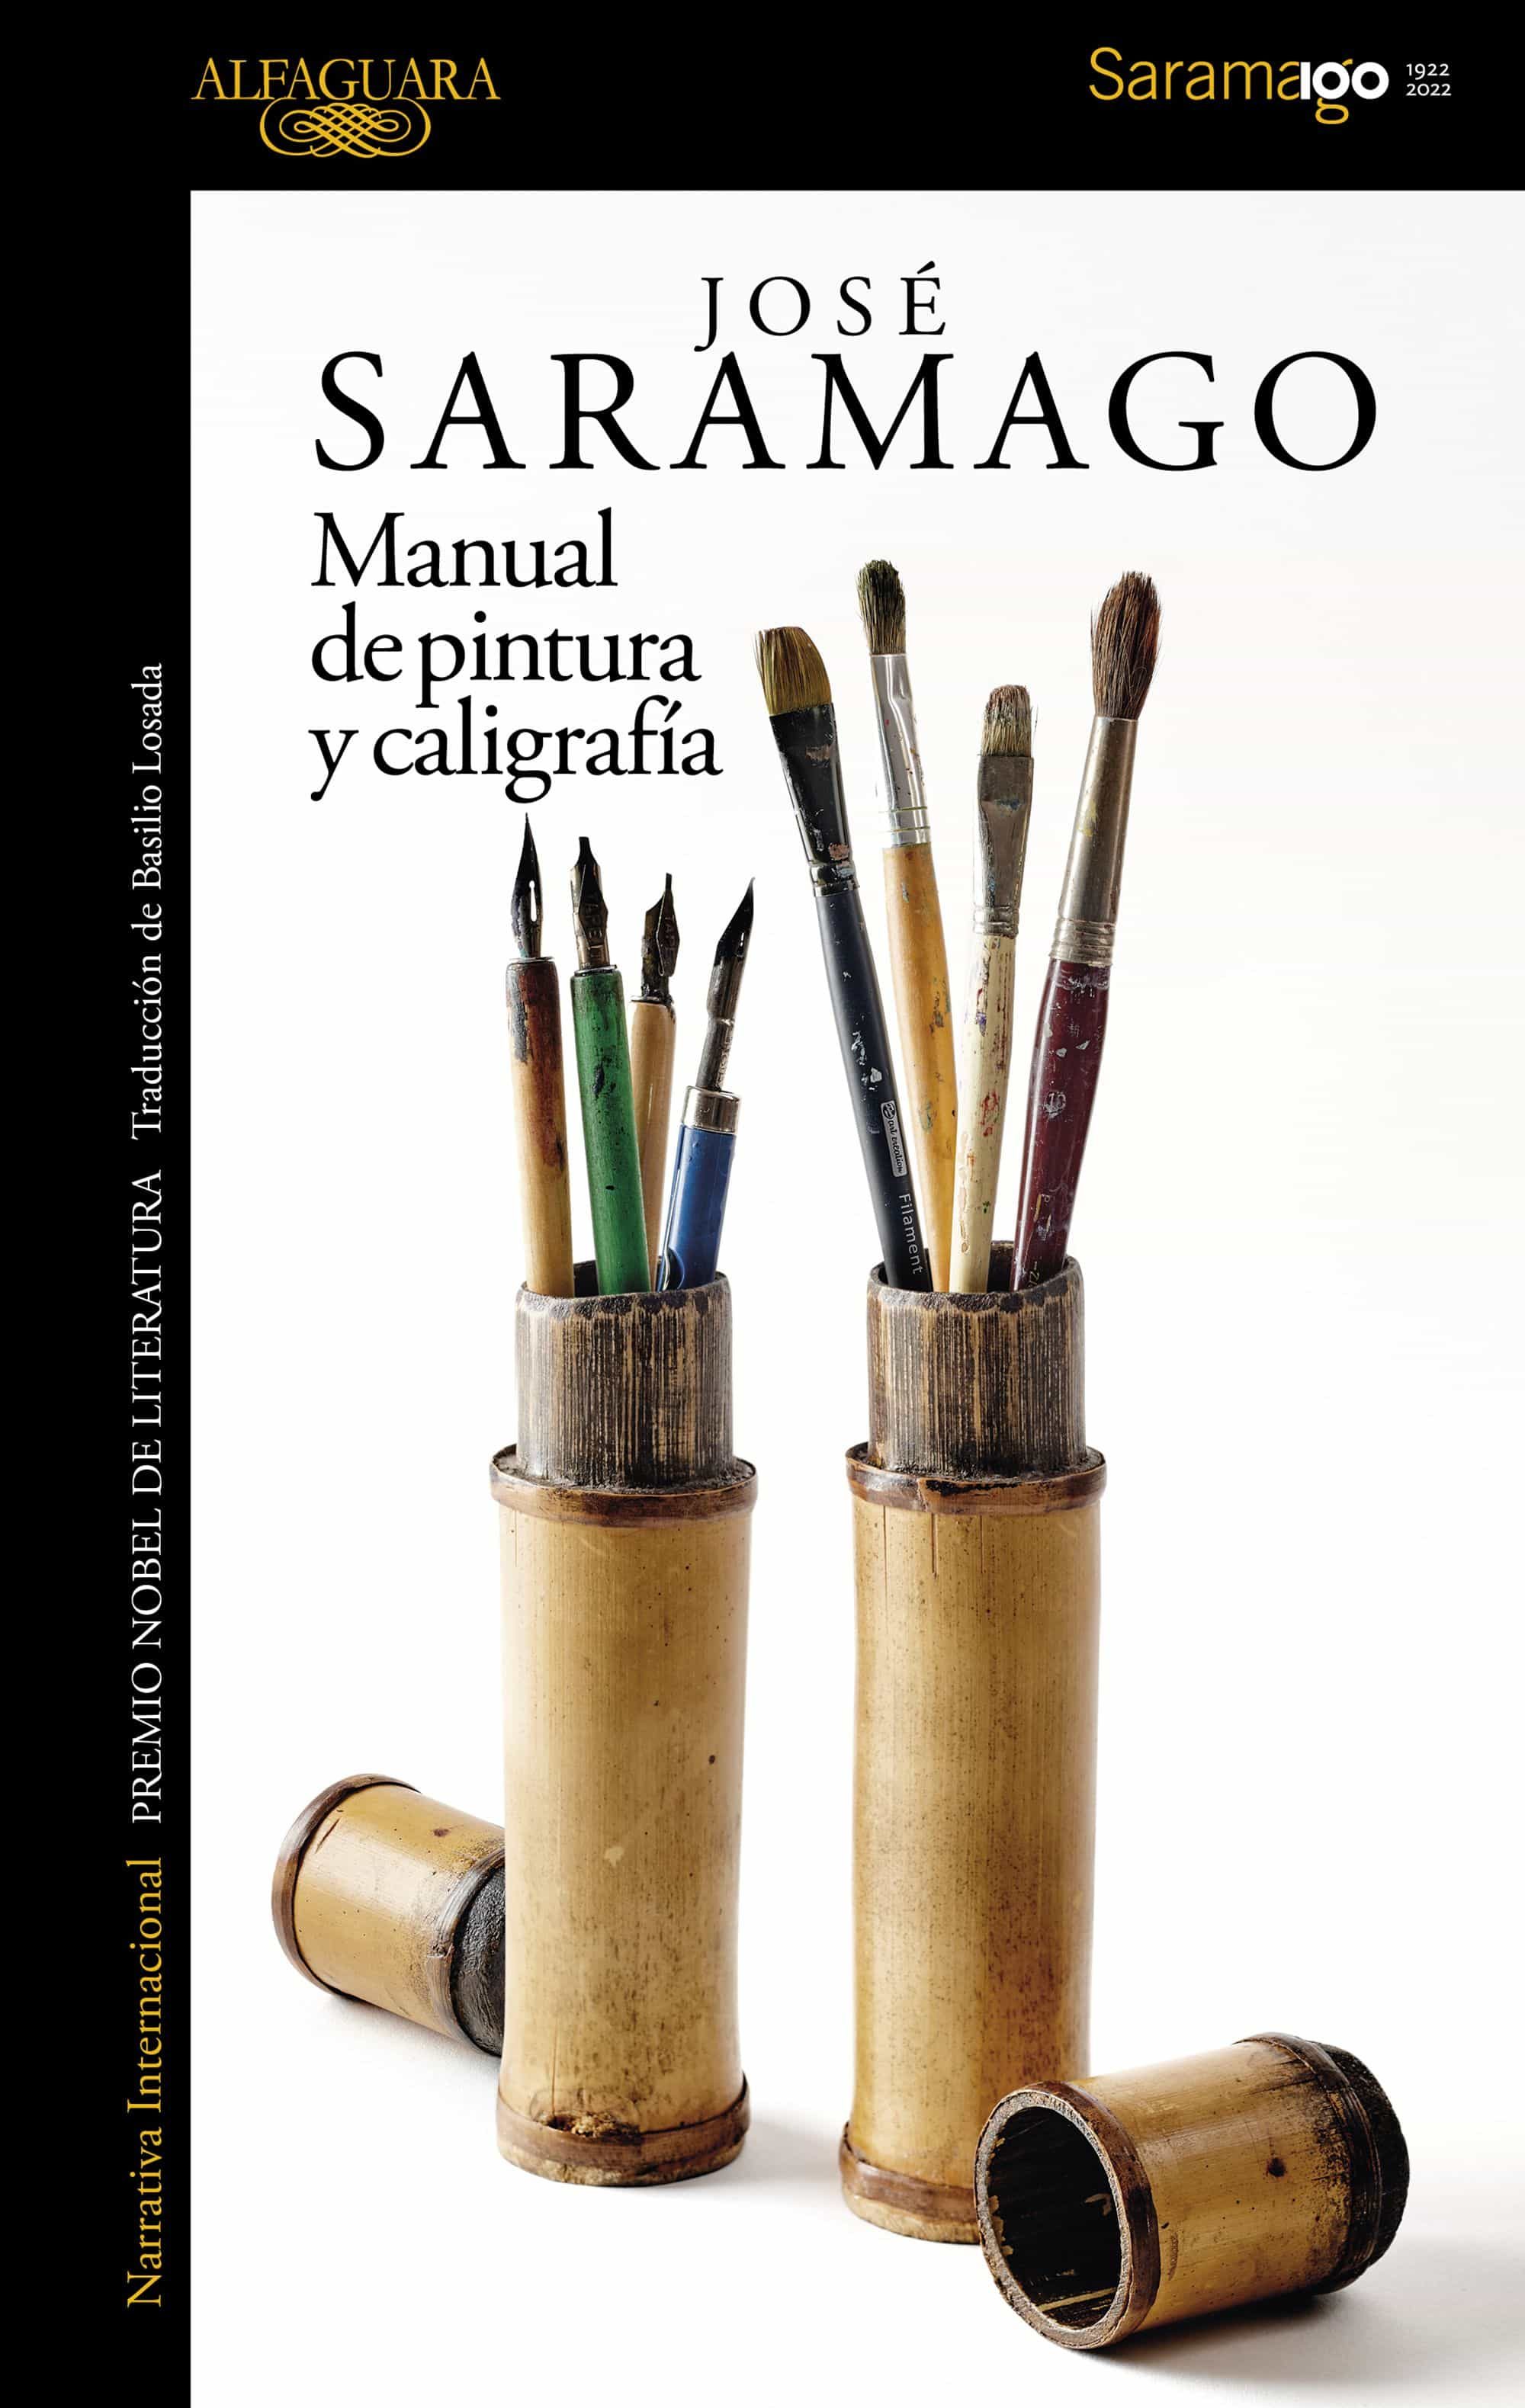 JOSE SARAMAGO MANUAL DE PINTURA Y CALIGRAFIA PDF